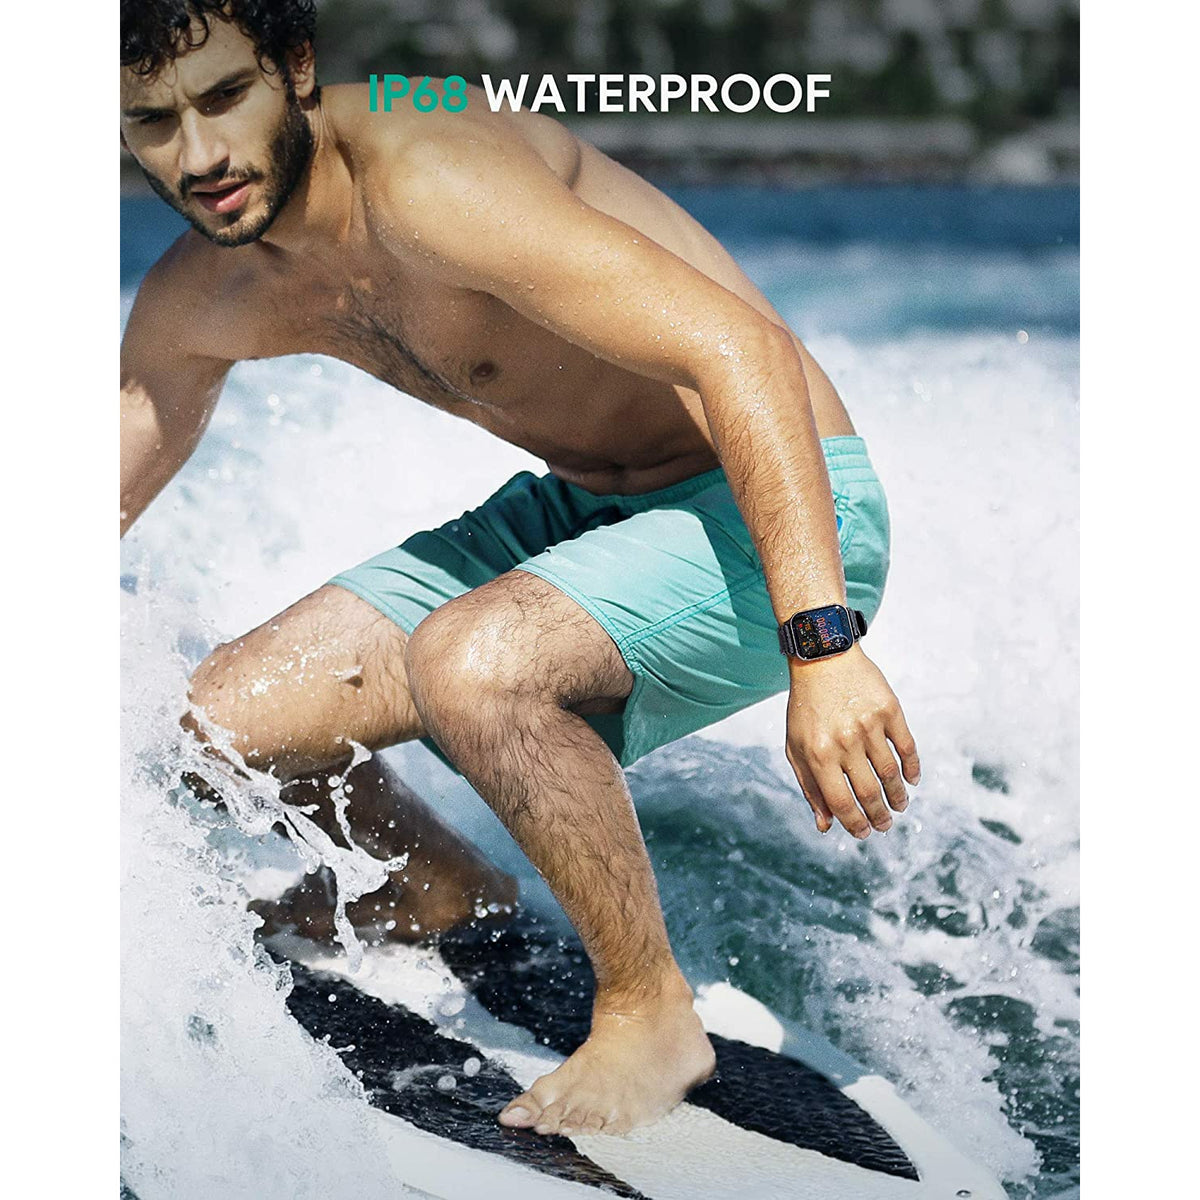 AUKEY Smartwatch Fitness Tracker 12 Activity Modes IPX6 Waterproof ( AUKEY LS02 ) New